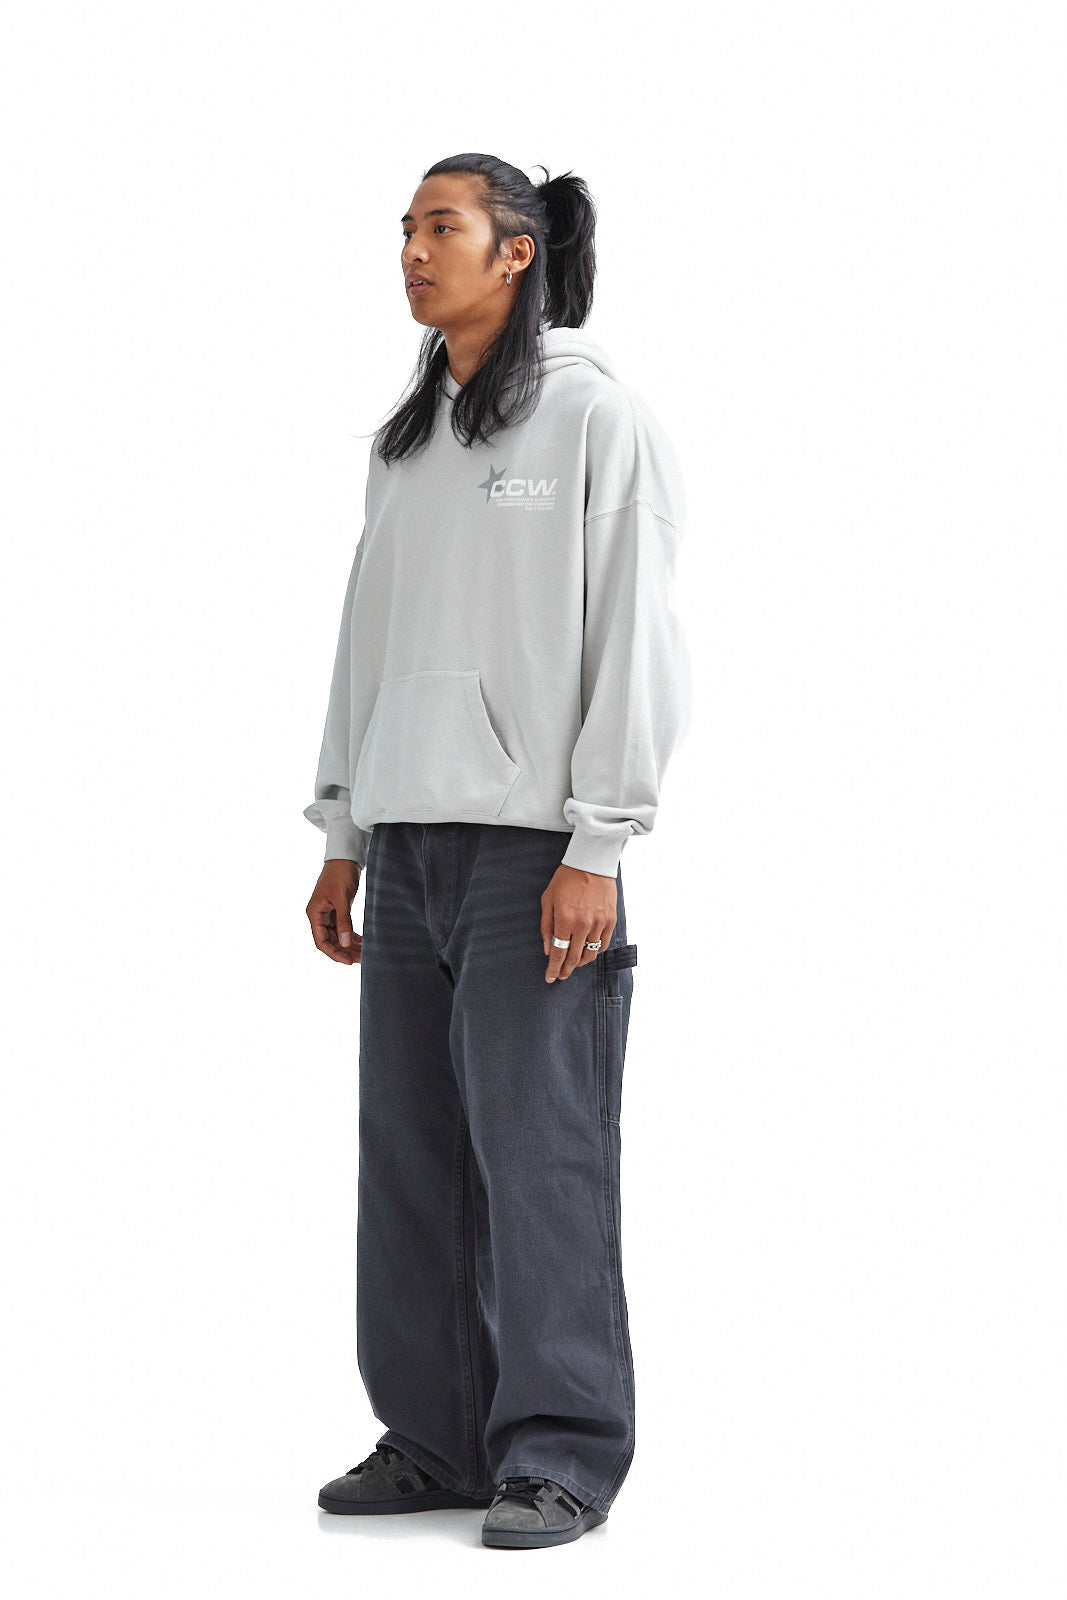 Gray Hoodie Jumpsuit Unisex Sizes XS - 2XL for Men & Women: Big